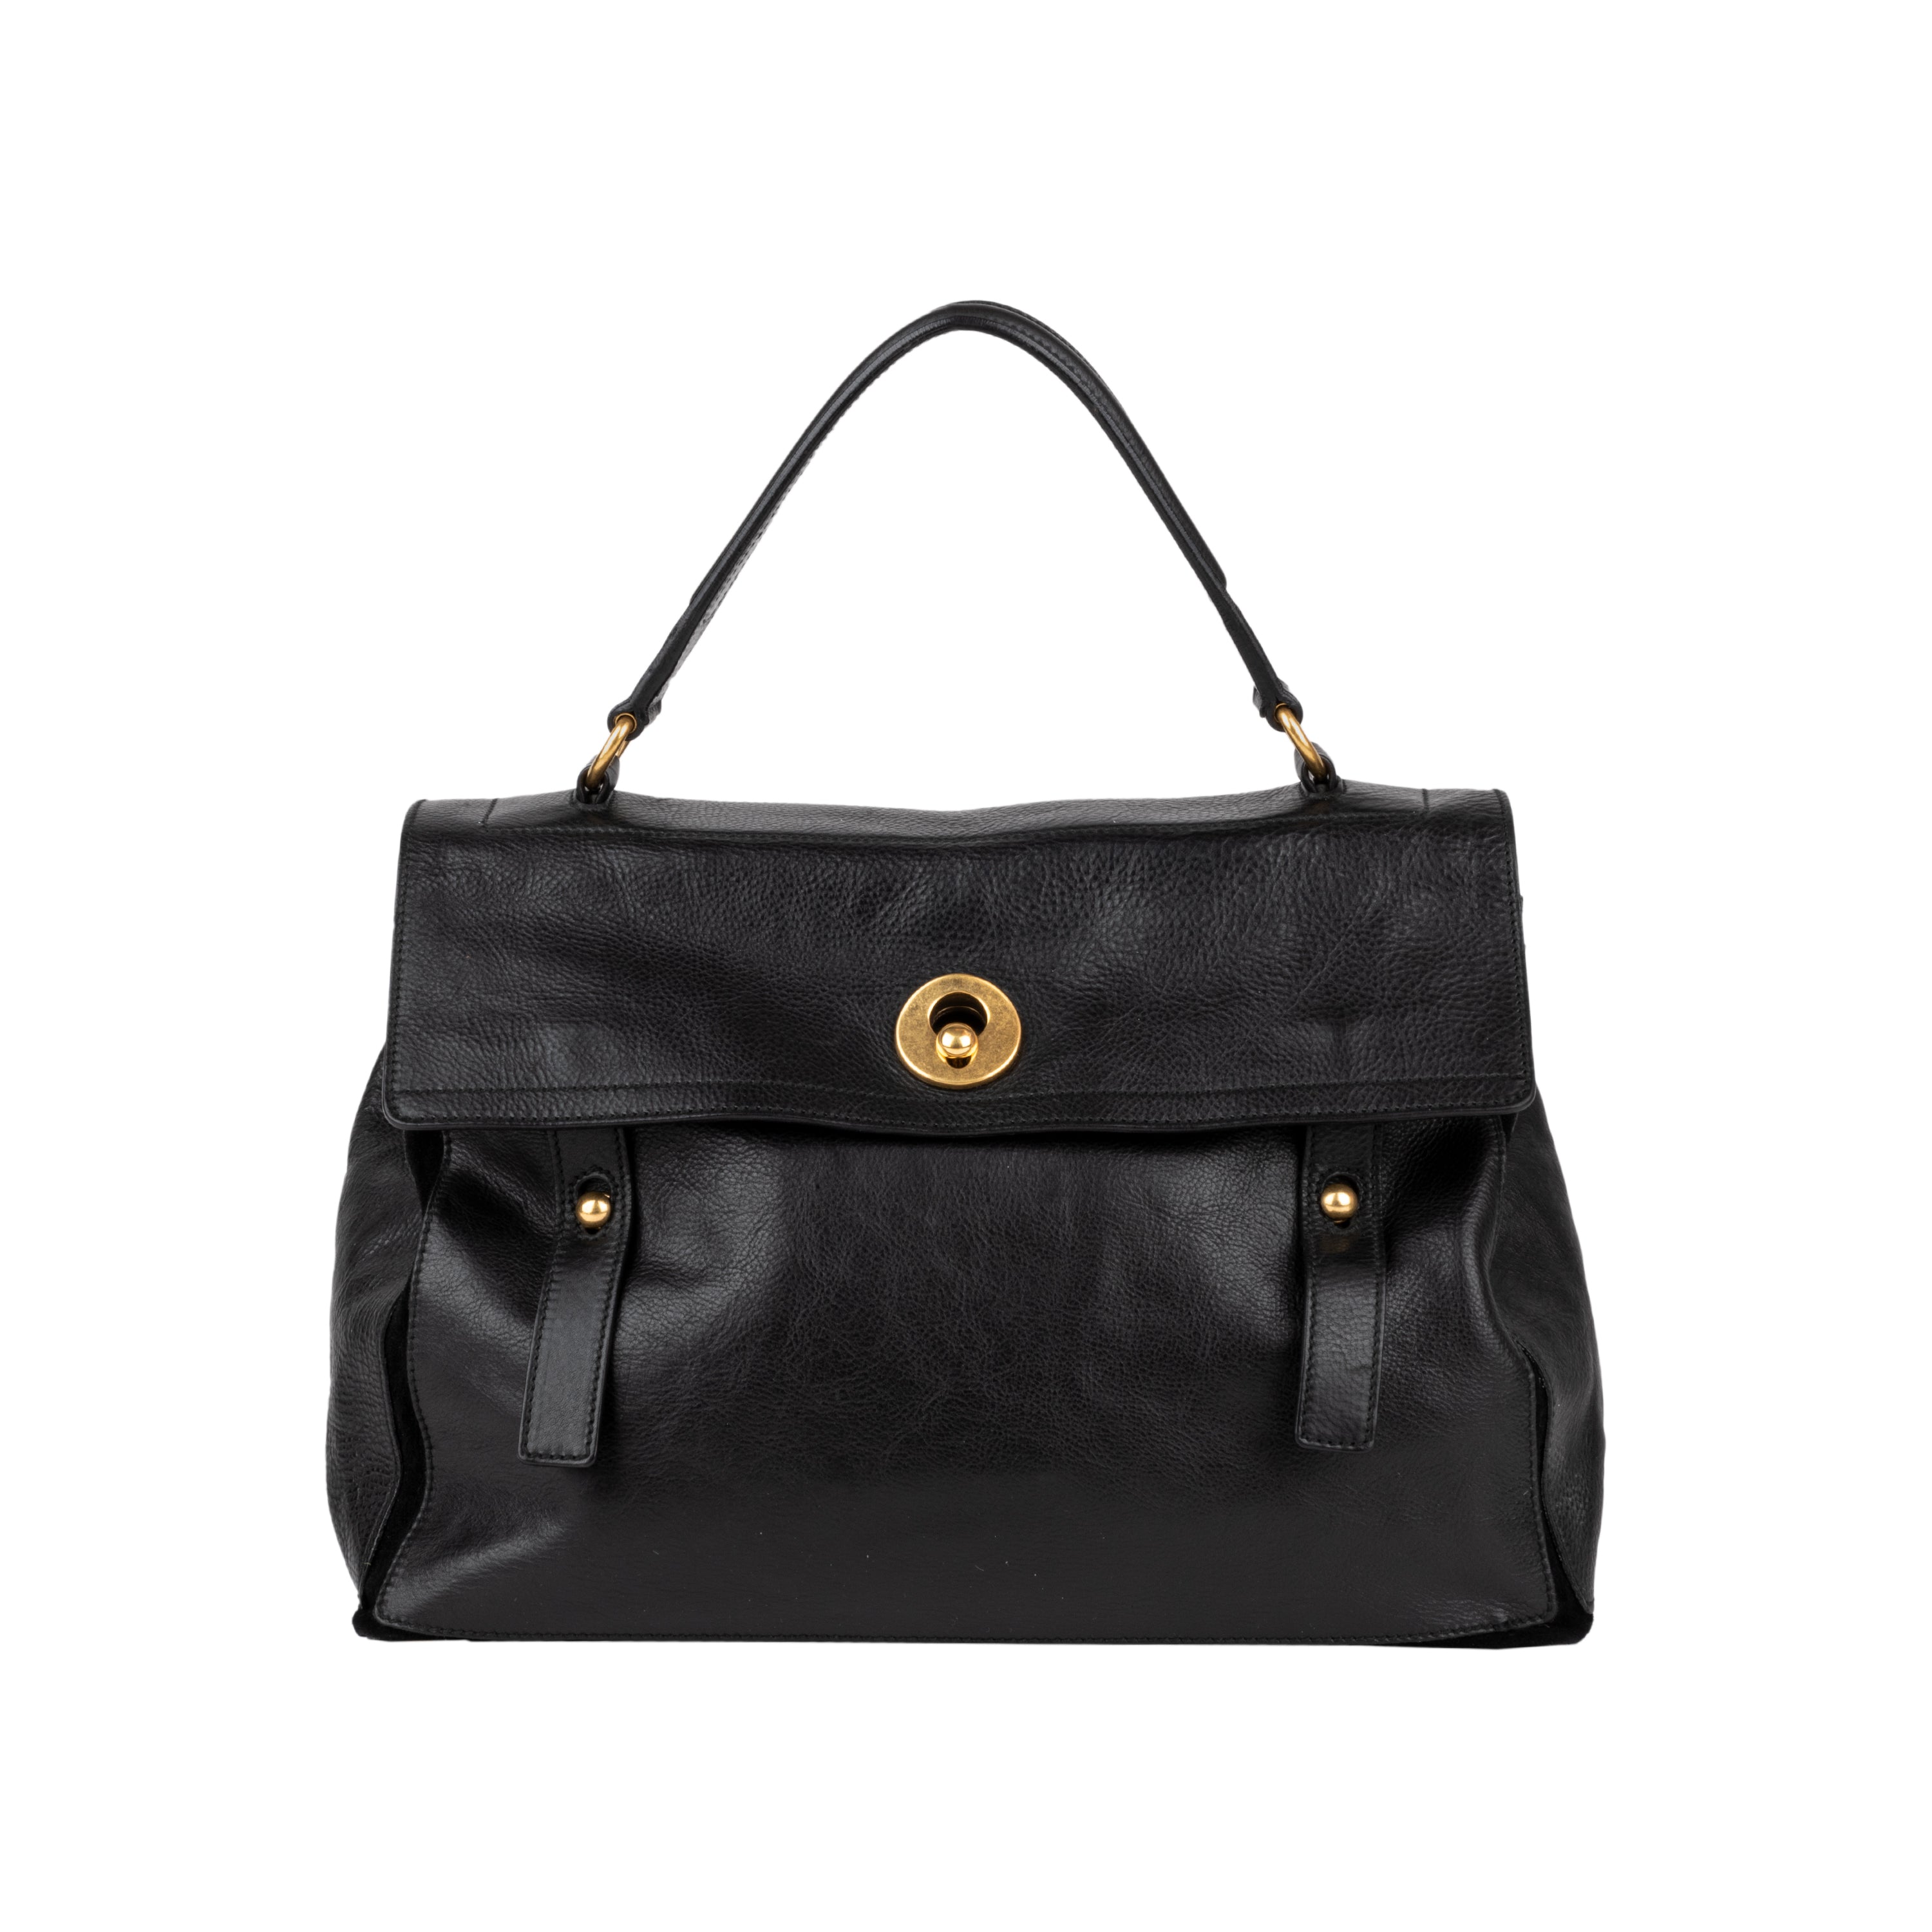 Yves Saint Laurent black leather Muse Two handbag - '00s